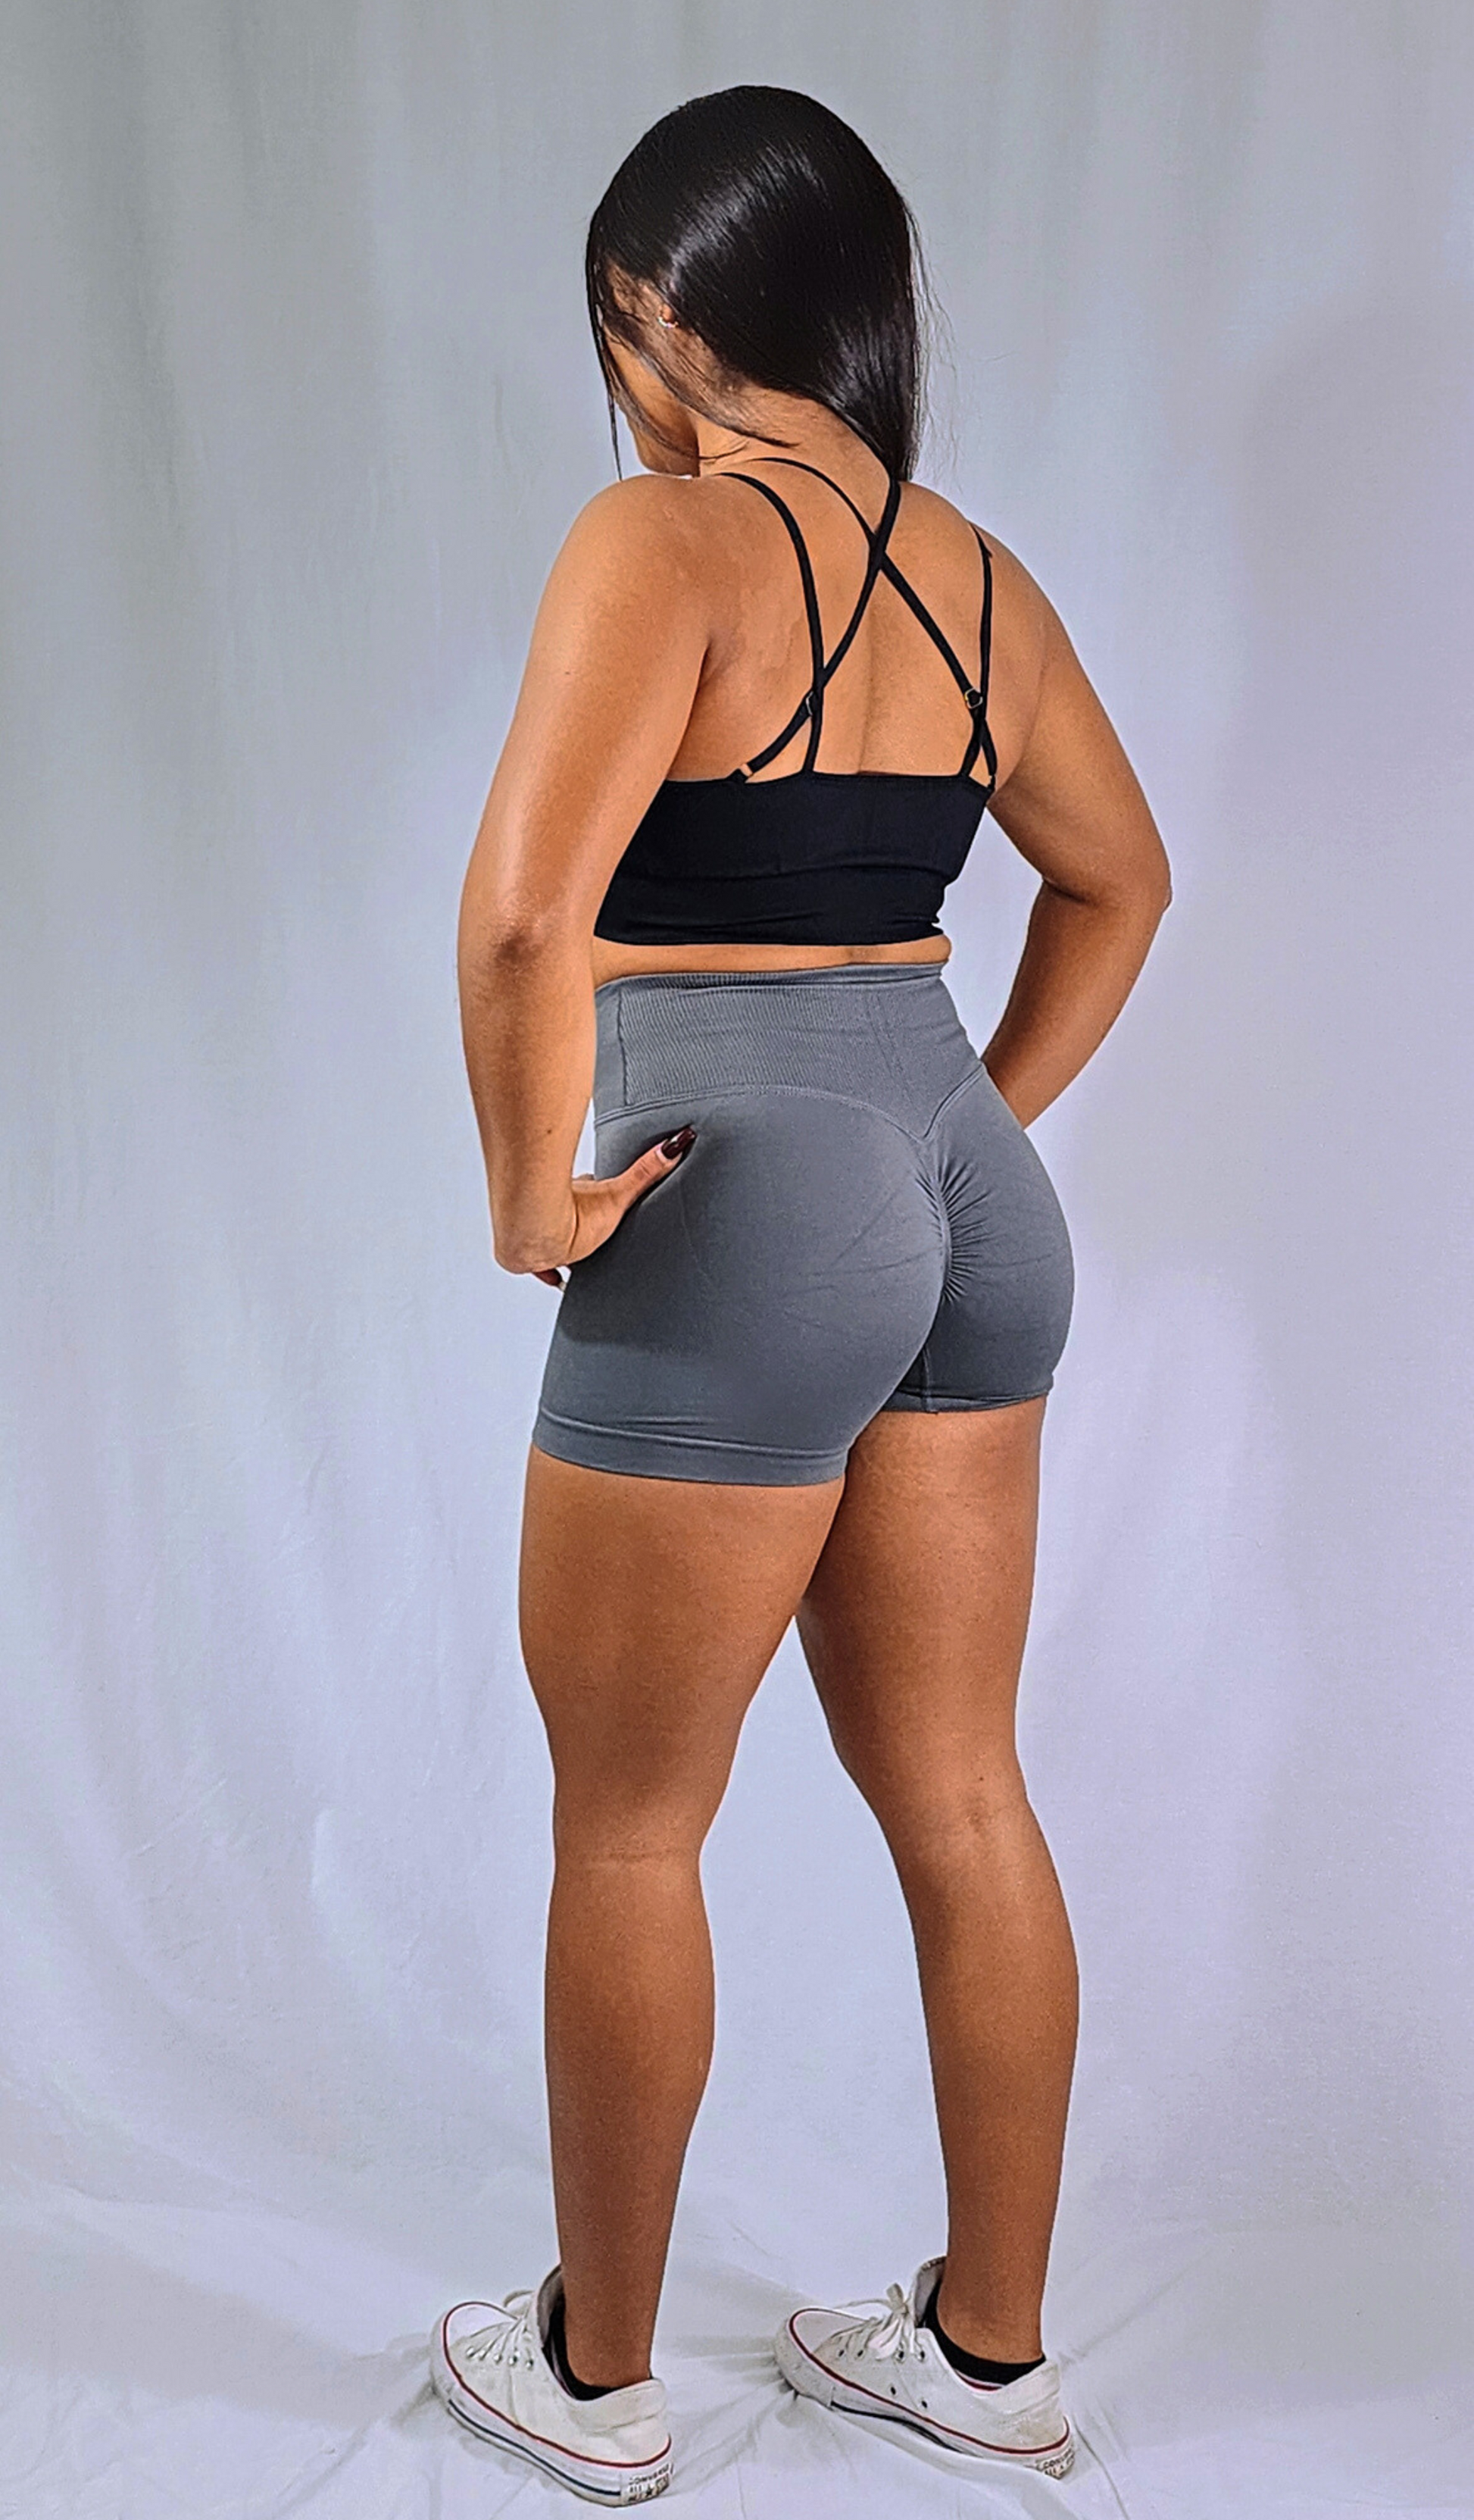 Gym Brand Apparel grey shorts and black strap back sports bra back view.